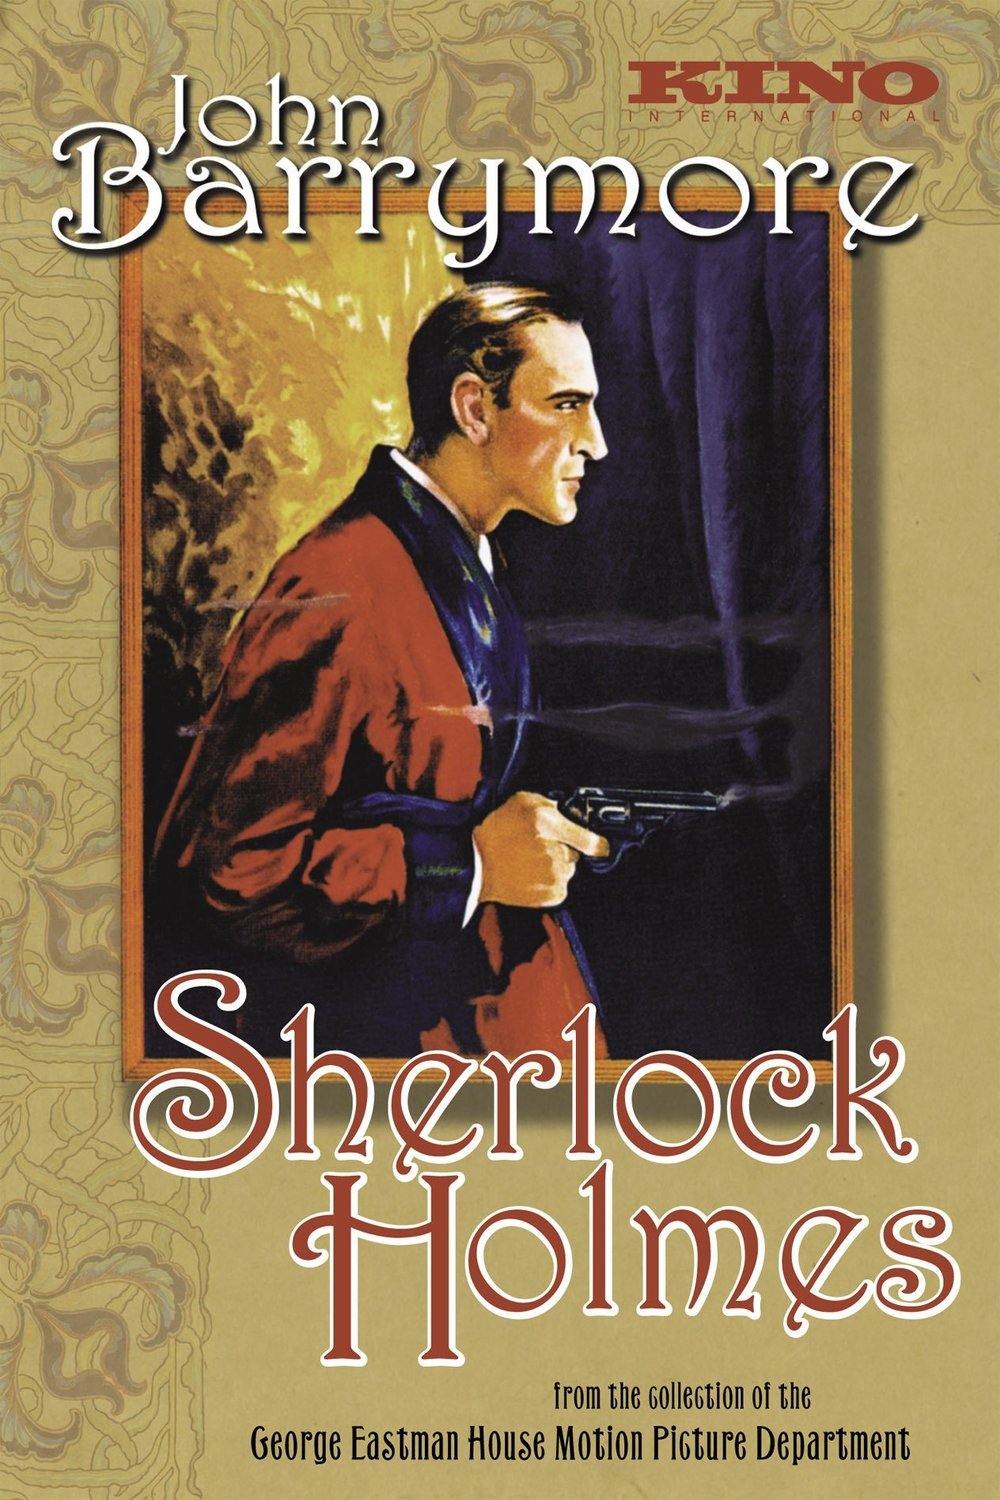 L'affiche du film Sherlock Holmes